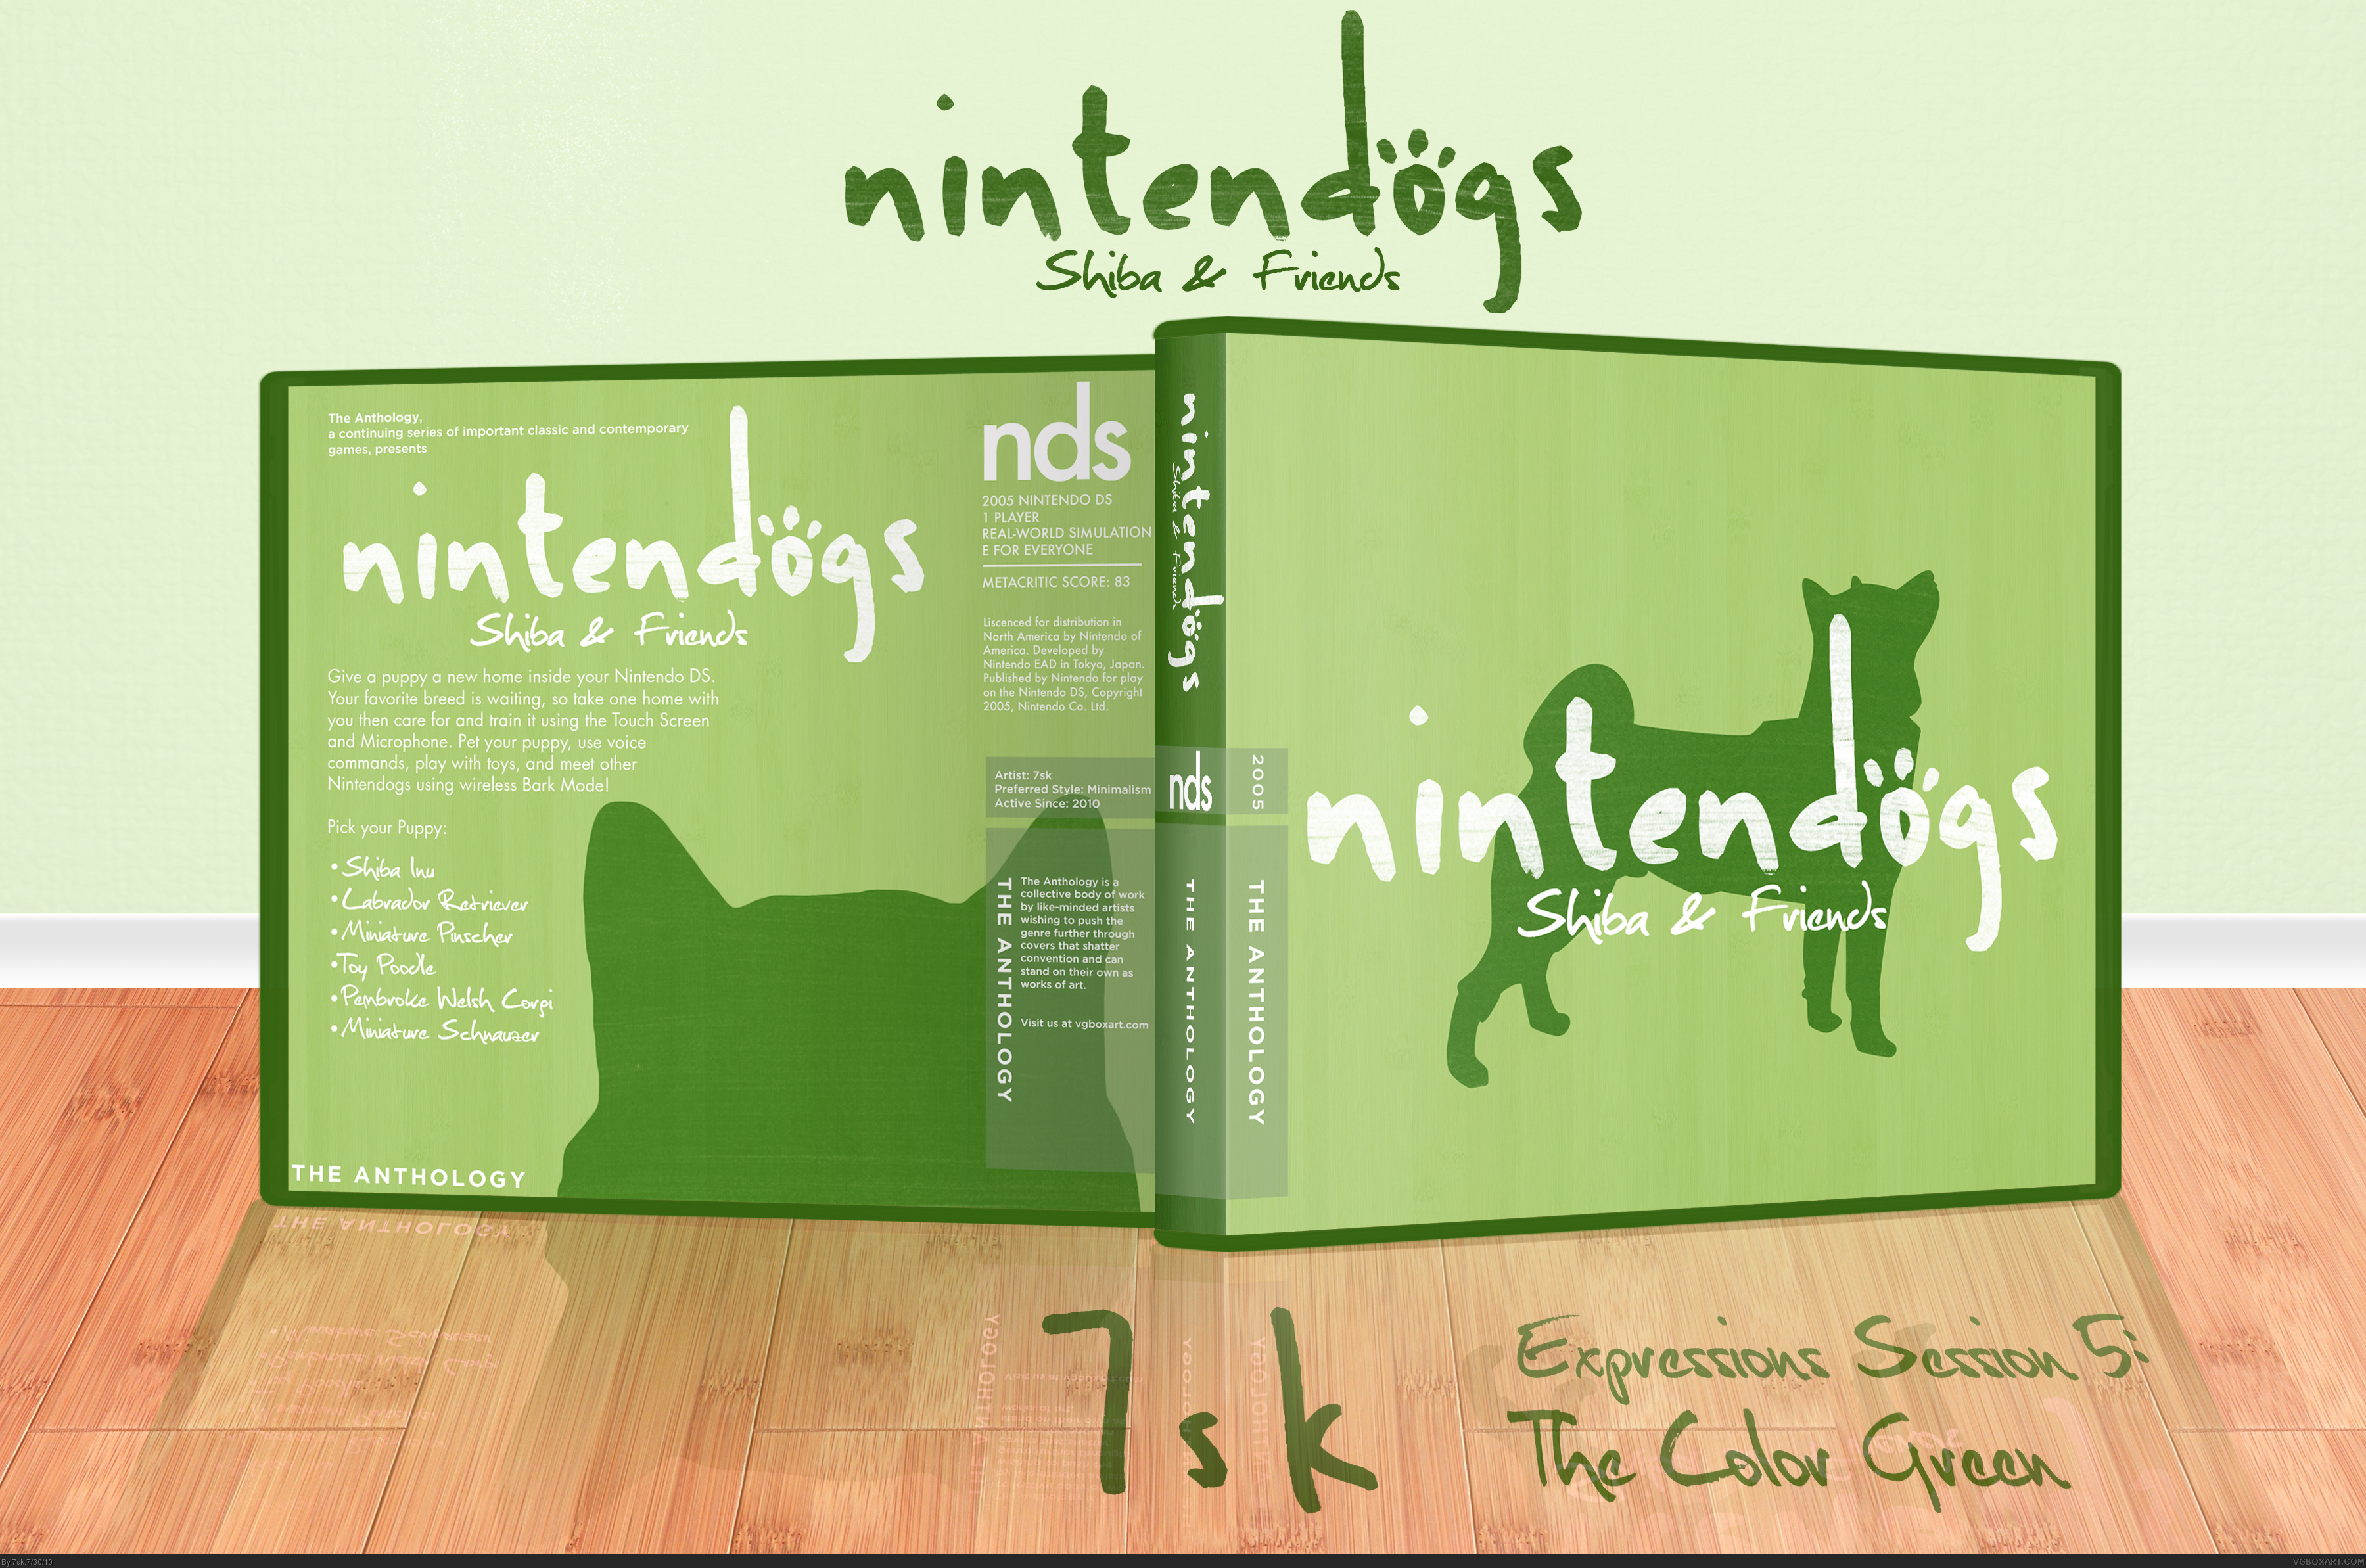 Nintendogs: Shiba & Friends box cover